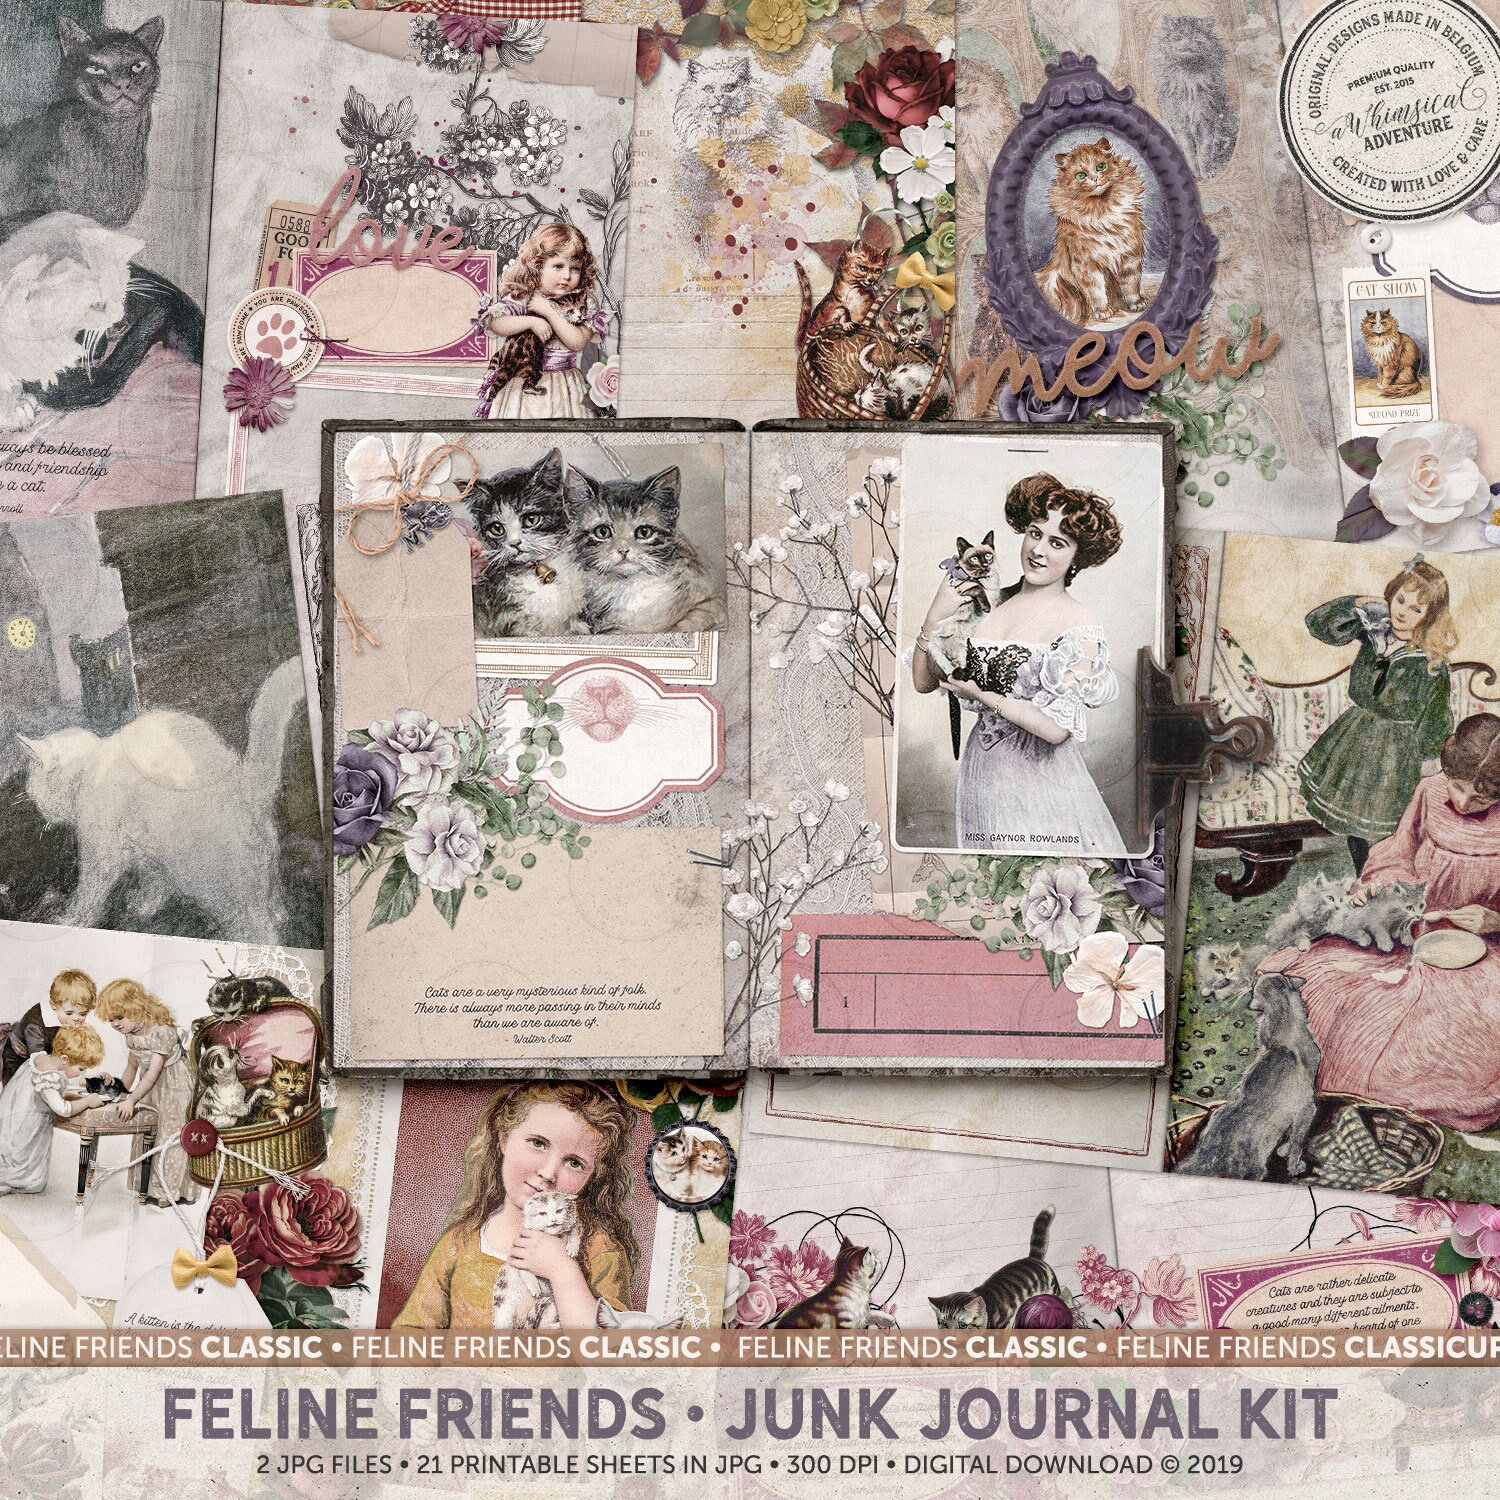 Pink Faux-Fur Glitter Kitty Cat Beauty & Fuzzy Journal Set w/Holograph –  Aura In Pink Inc.